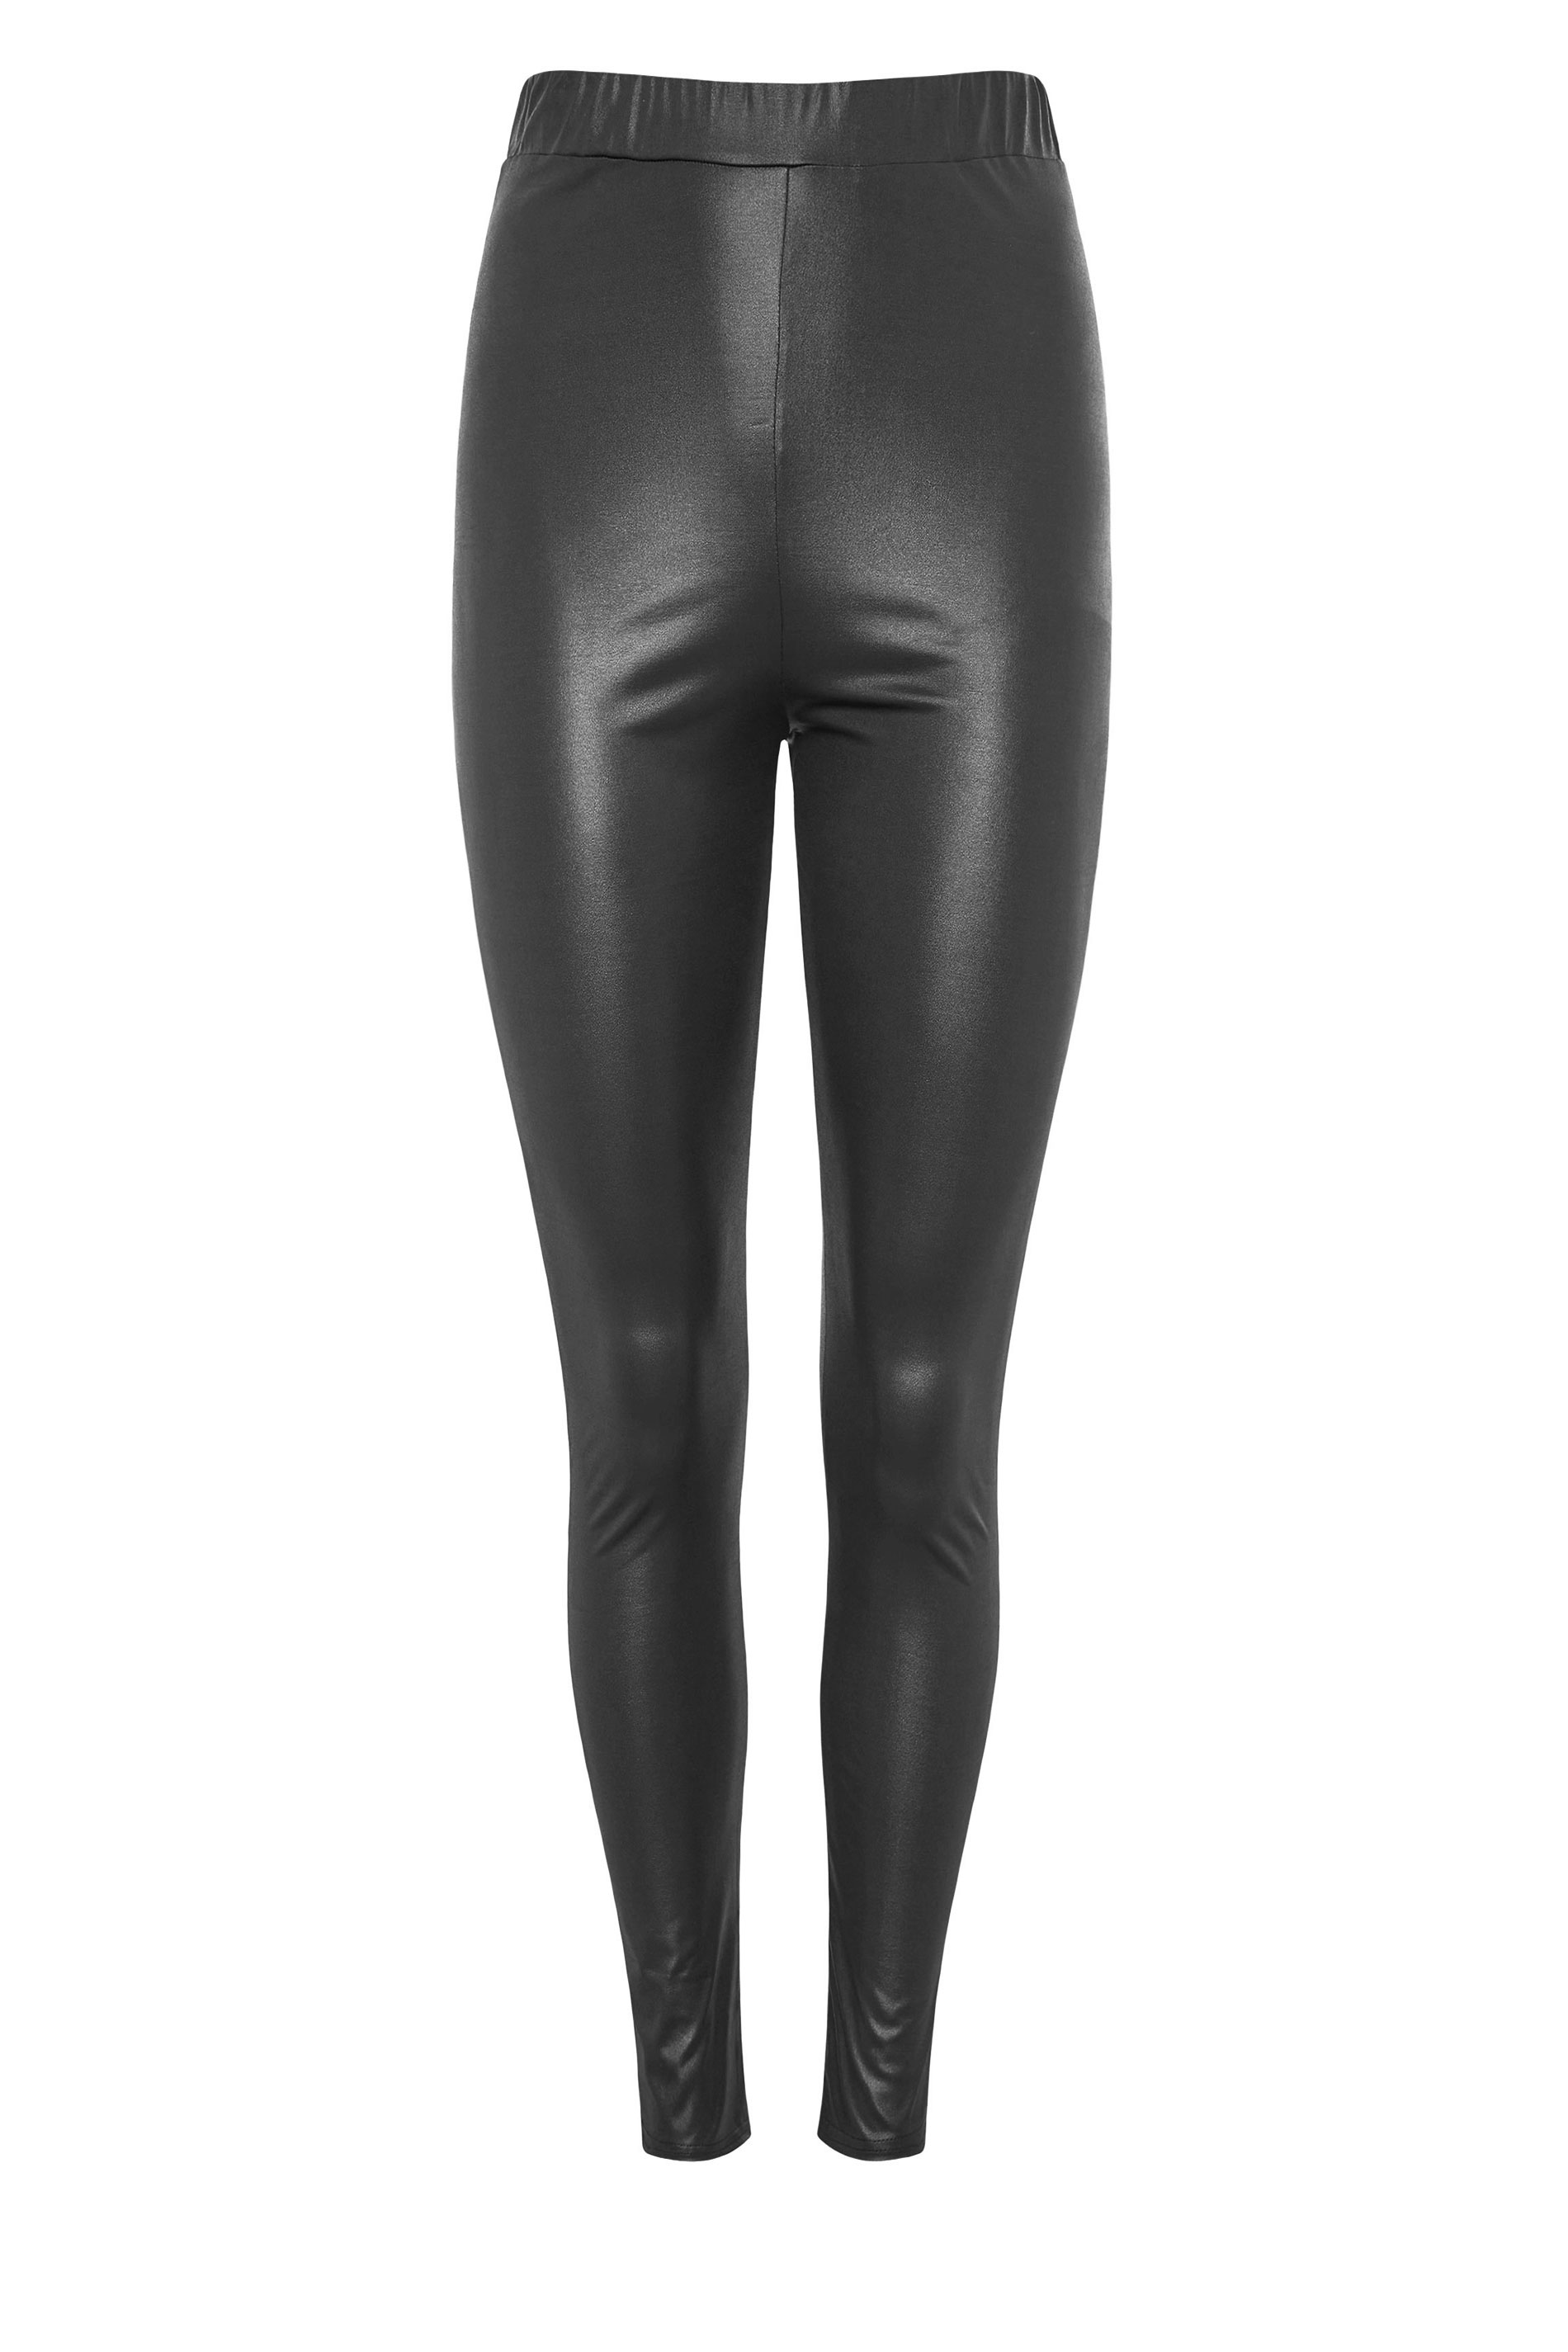 Tall Women's LTS Black Faux Leather Leggings | Long Tall Sally 2